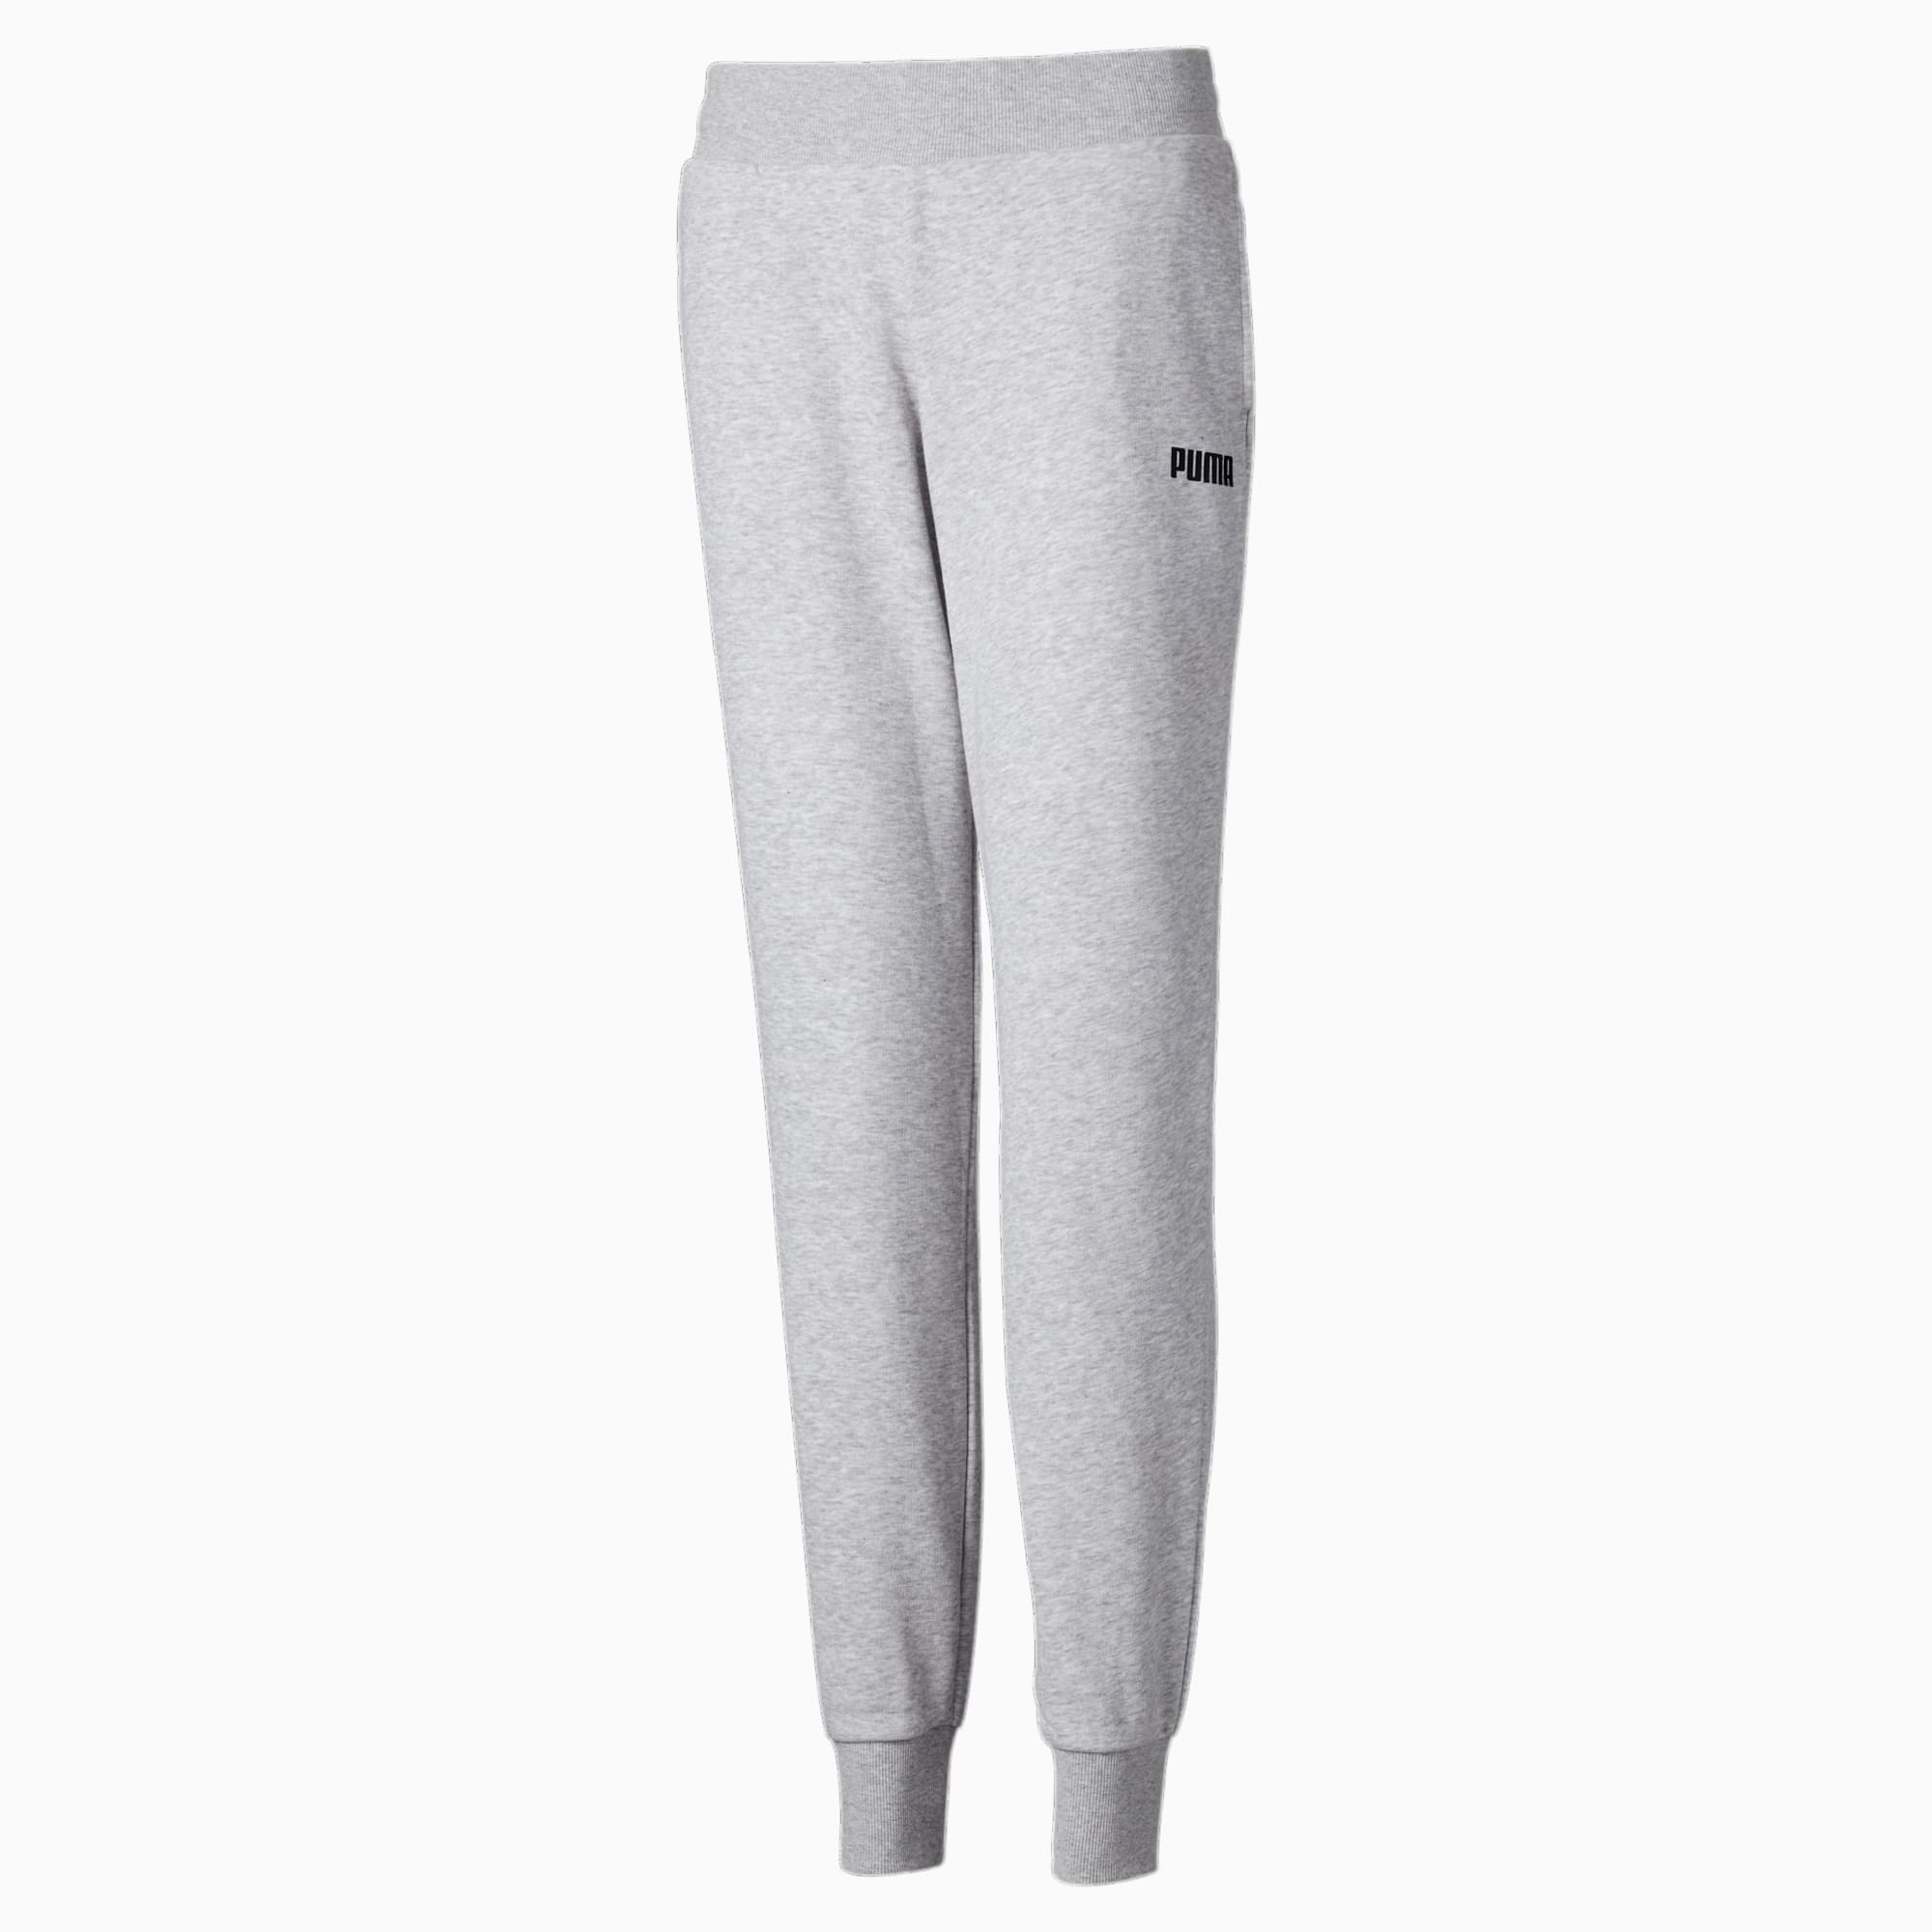 Essentials Women's Sweat Pants | Light Gray Heather | PUMA Shop All ...